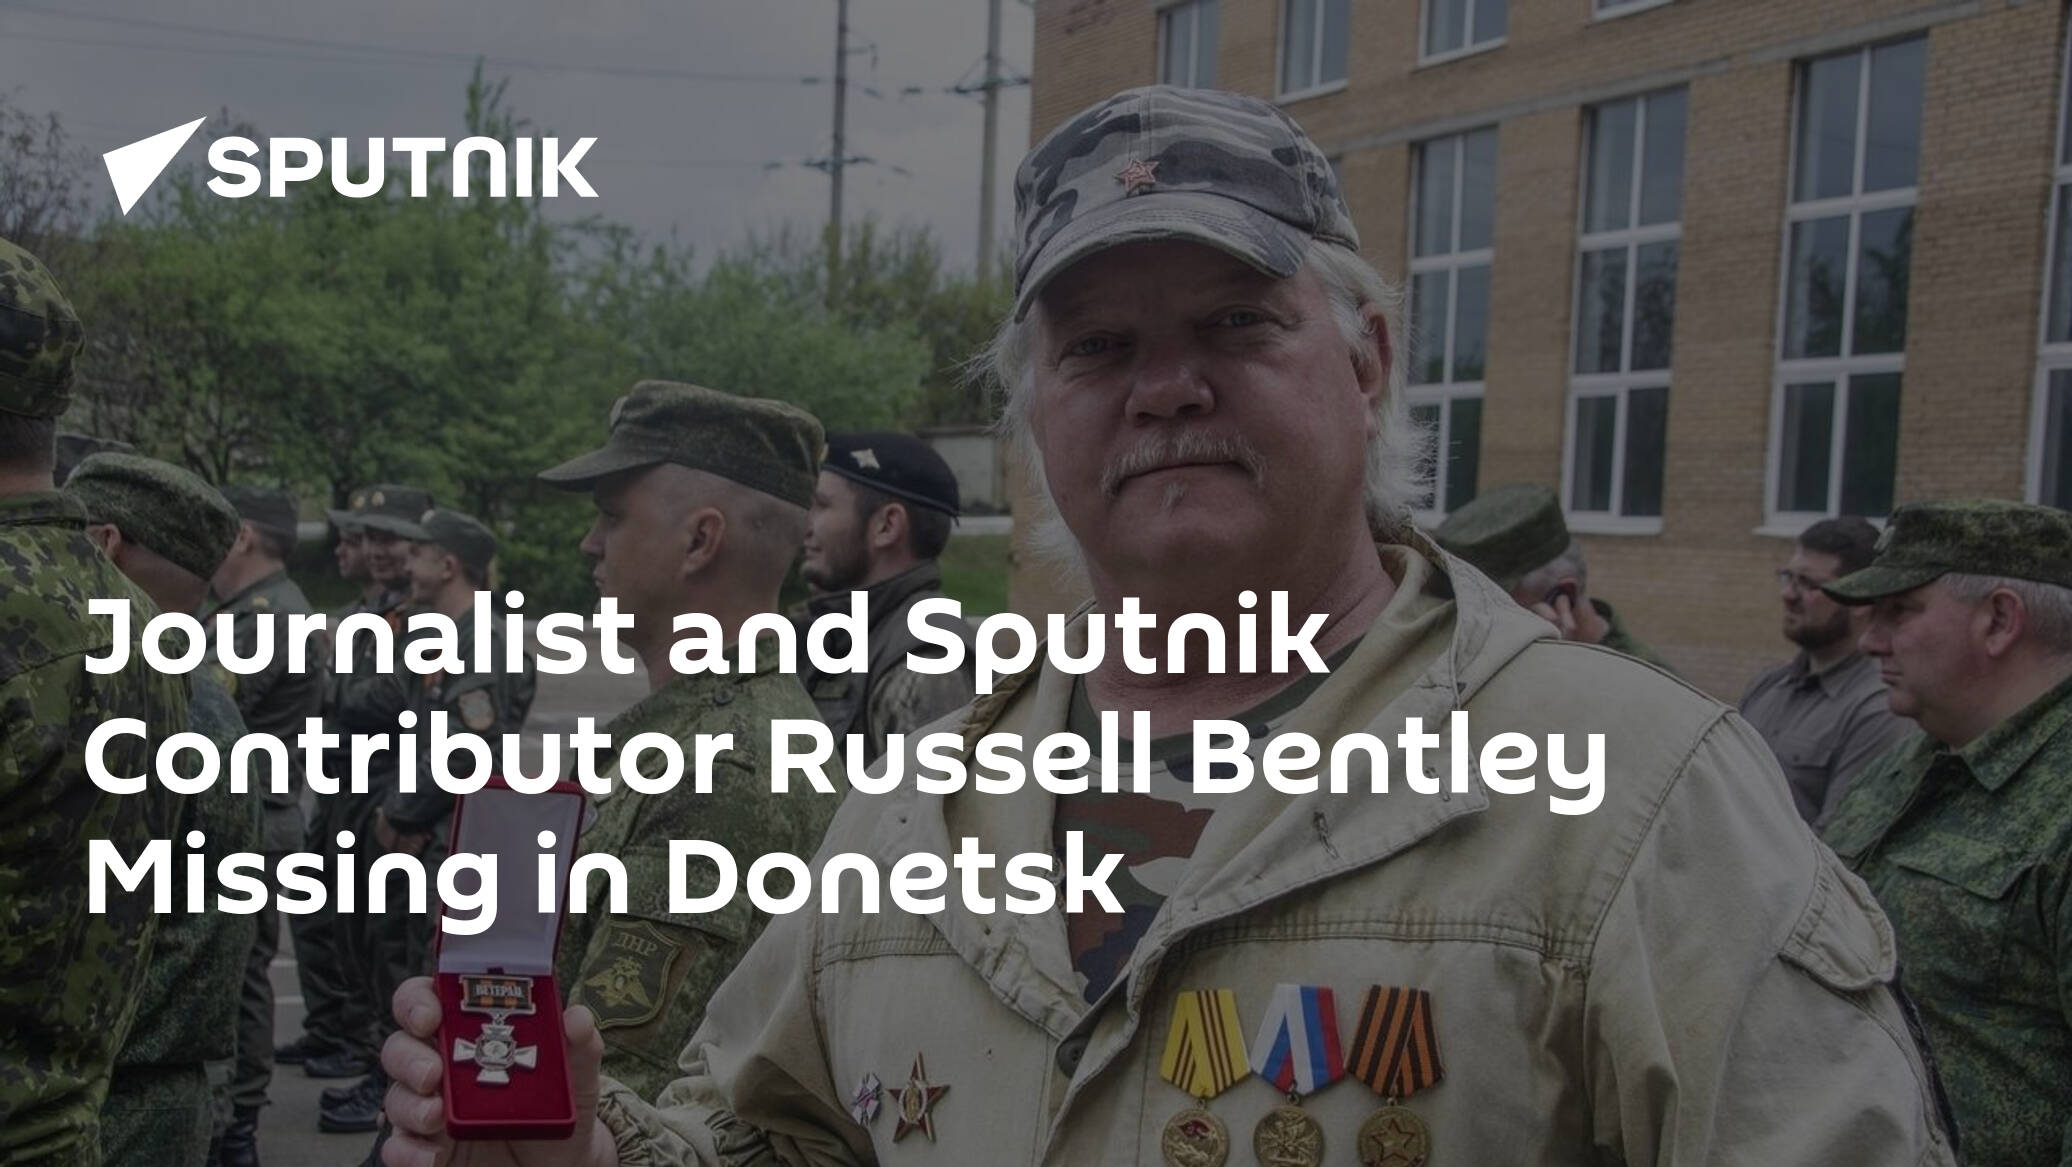 Donetsk Journalist and Sputnik Contributor Russell Bentley Missing in Donetsk